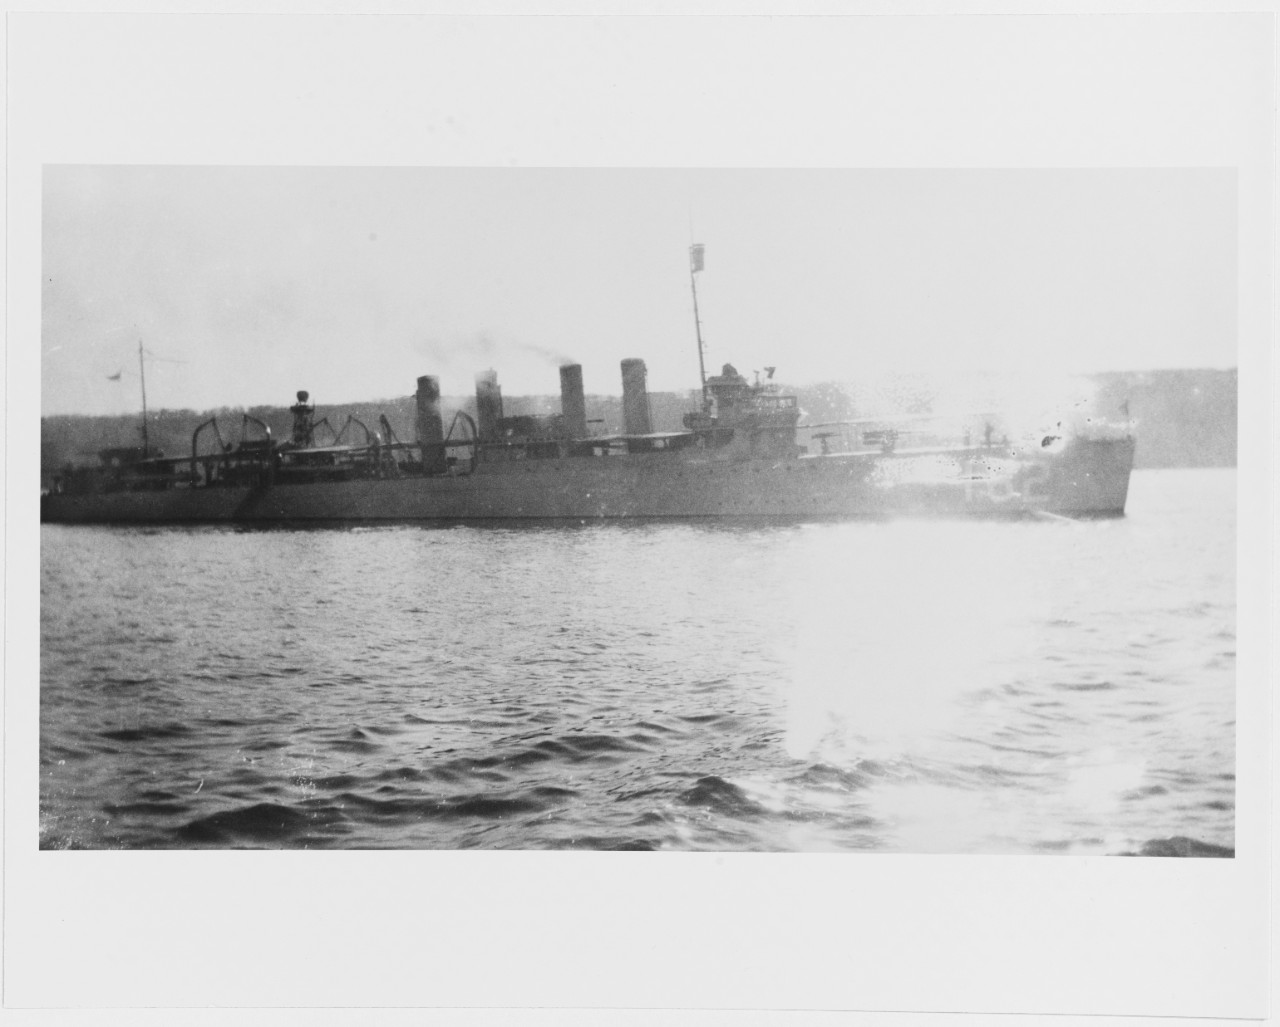 USS THOMAS (DD-182) Photographed circa 1920.